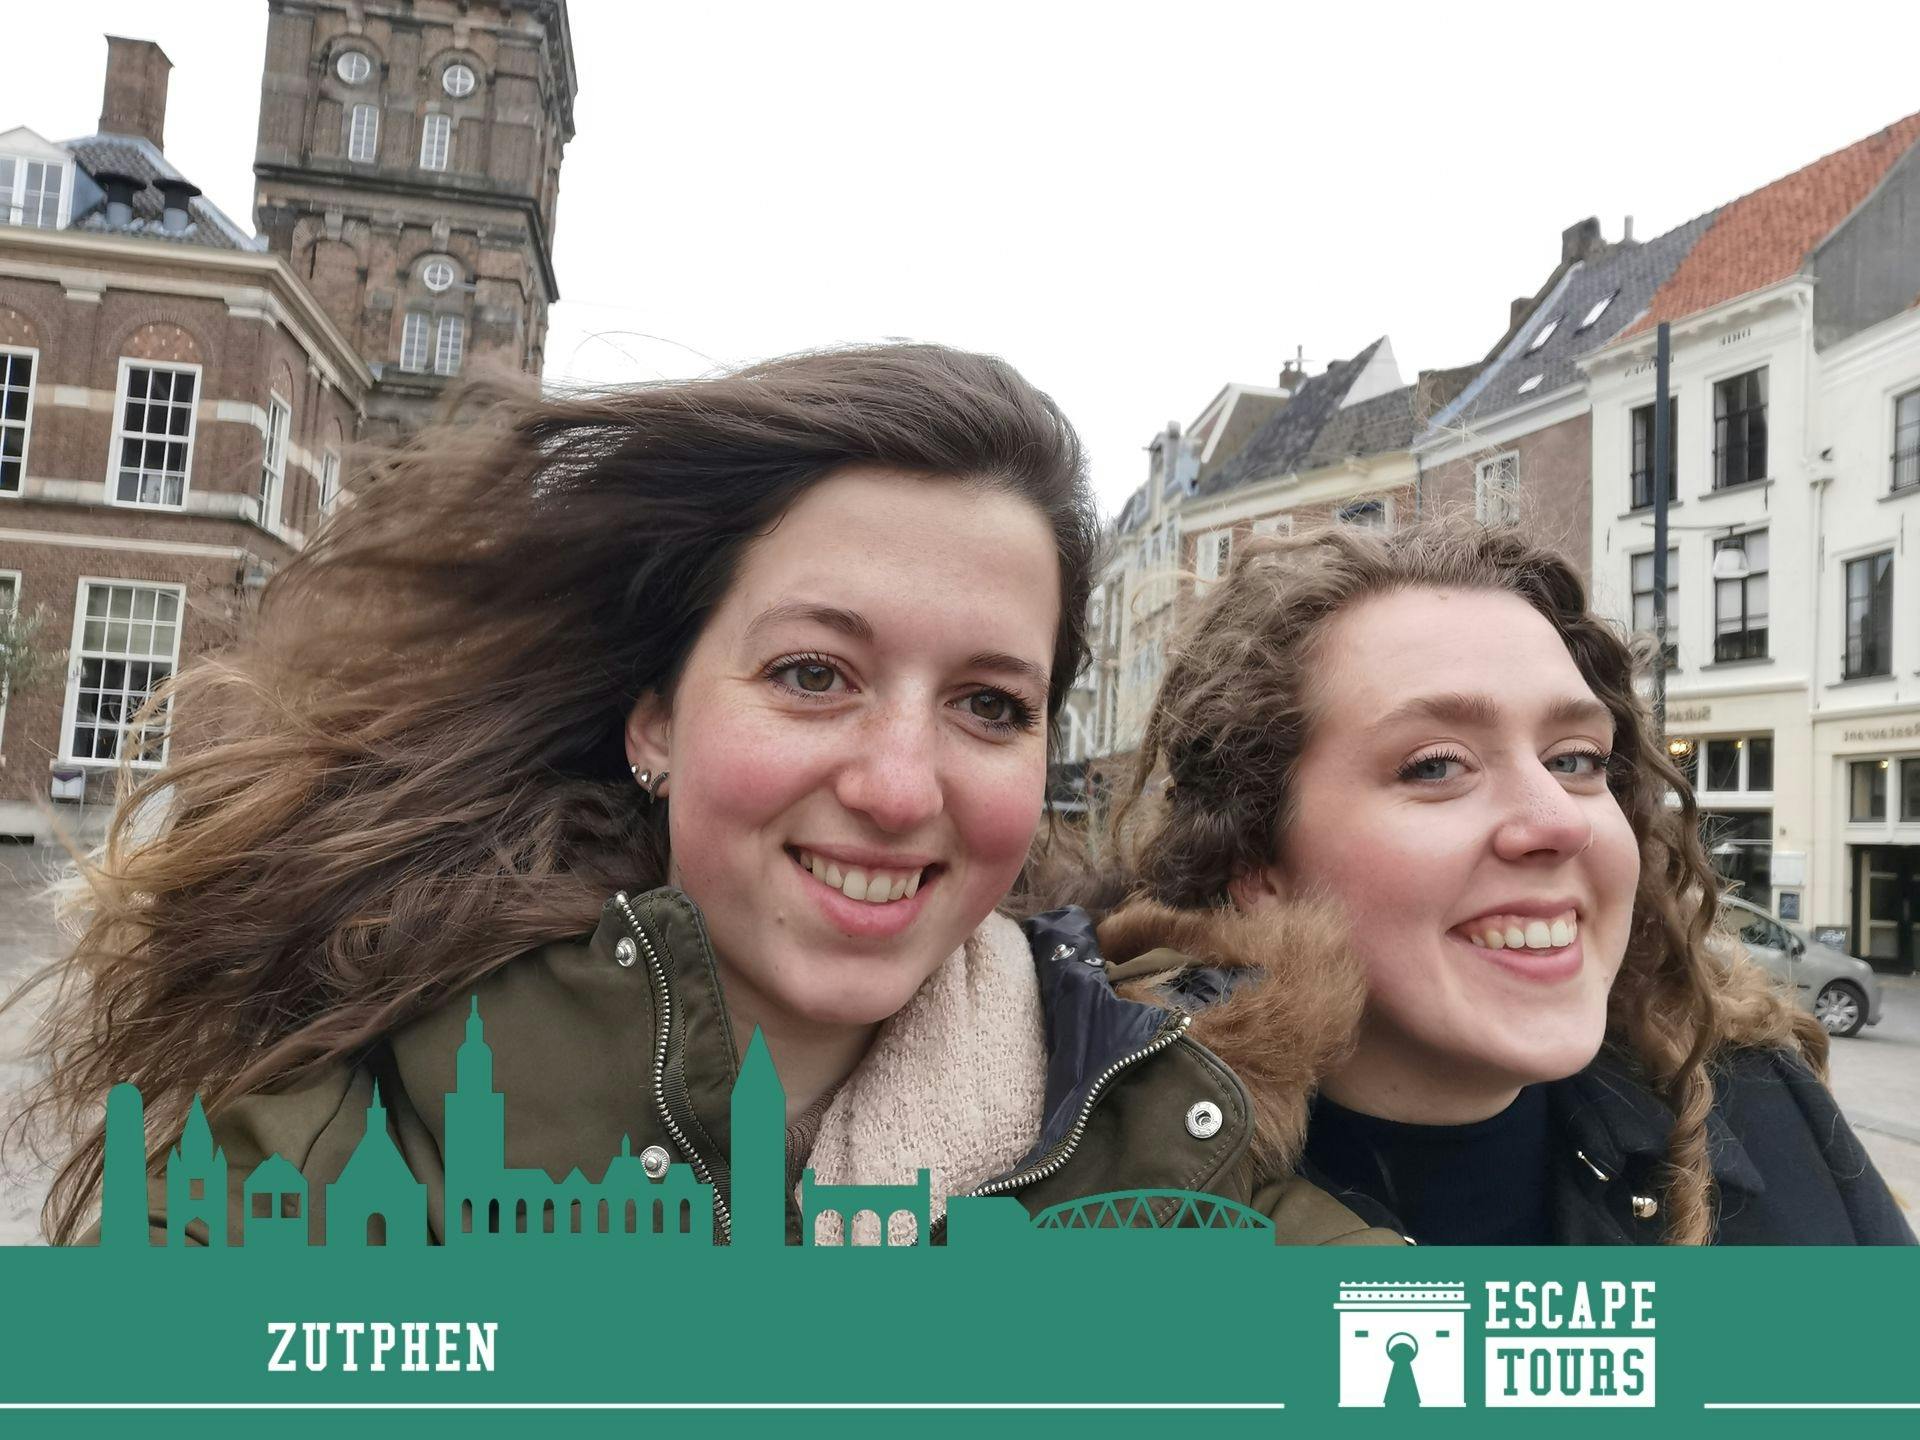 Escape Tour zelfgeleide, interactieve stadsuitdaging in Zutphen